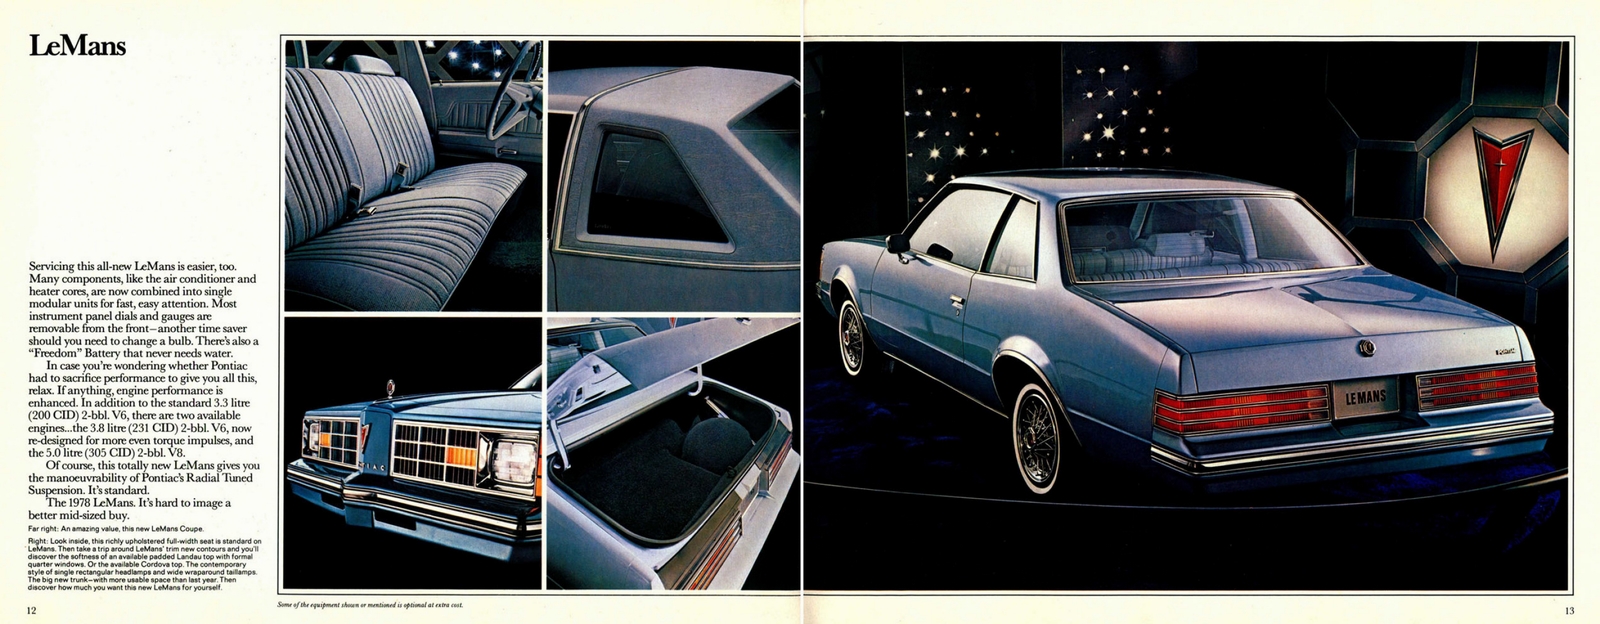 n_1978 Pontiac LeMans (Cdn)-12-13.jpg